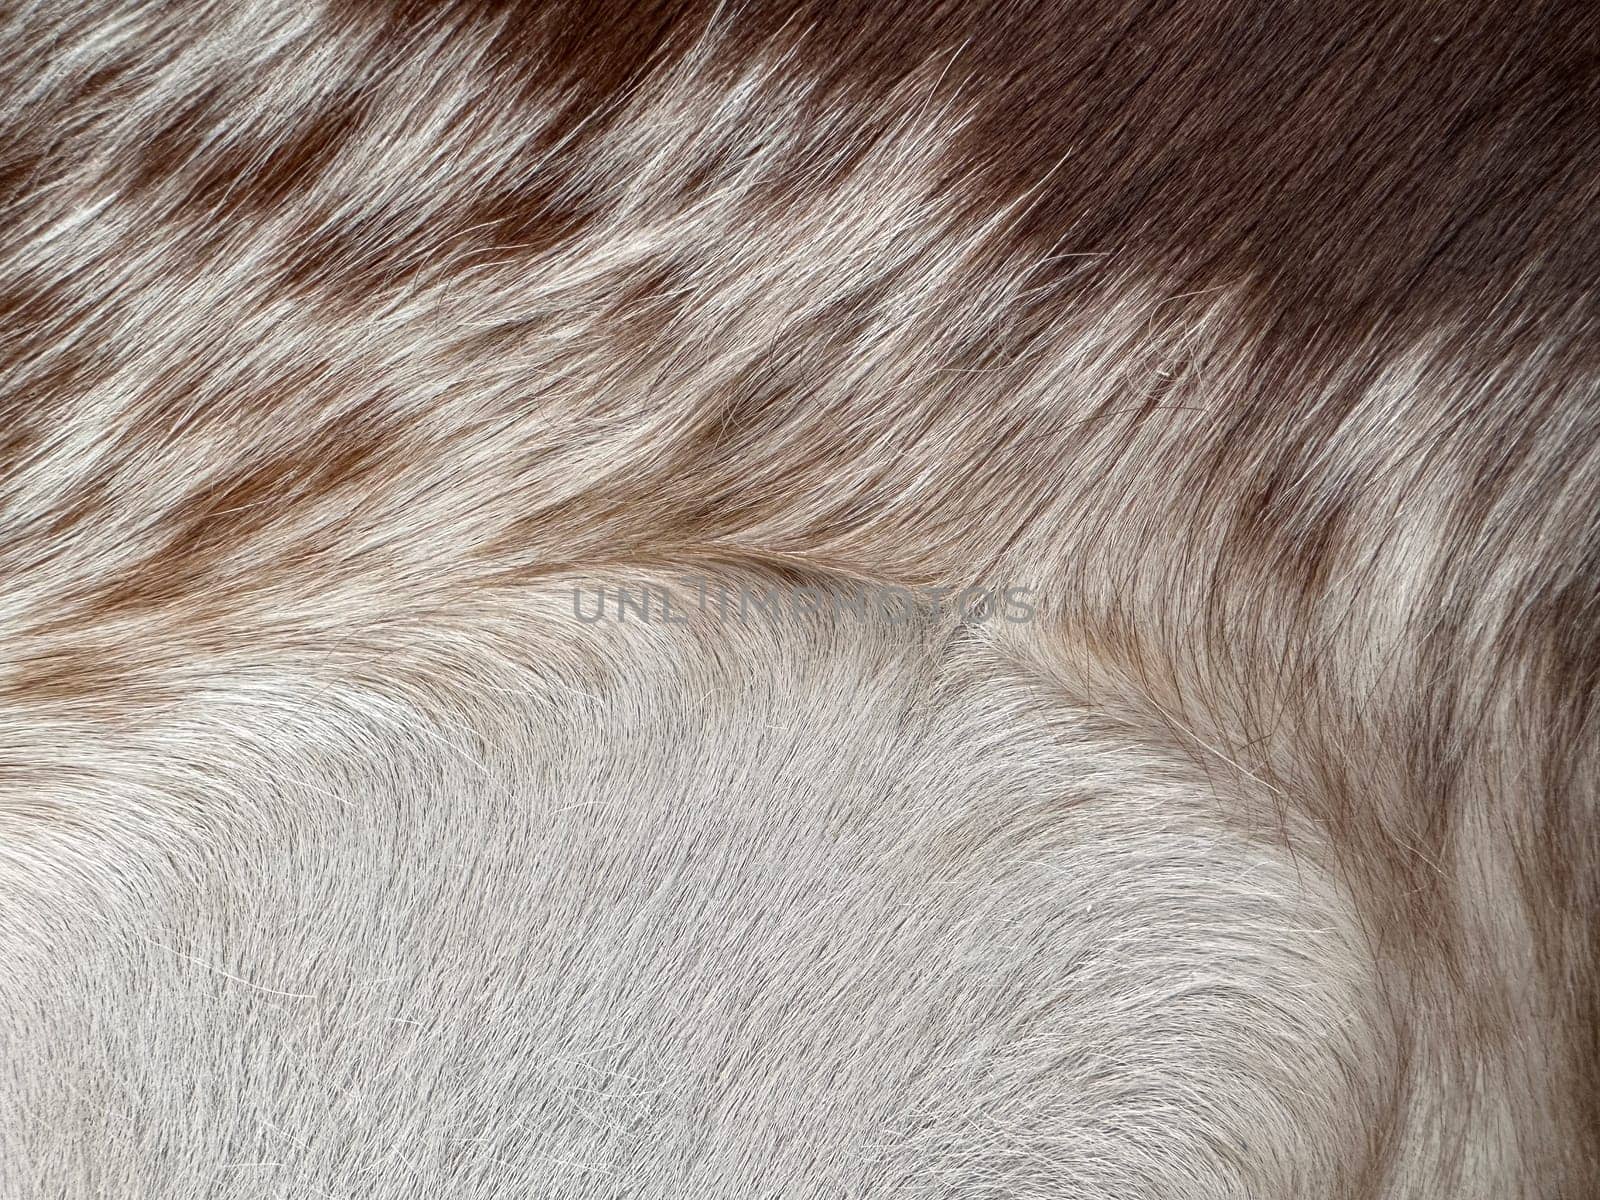 Animal hair close-up macro, texture. High quality photo